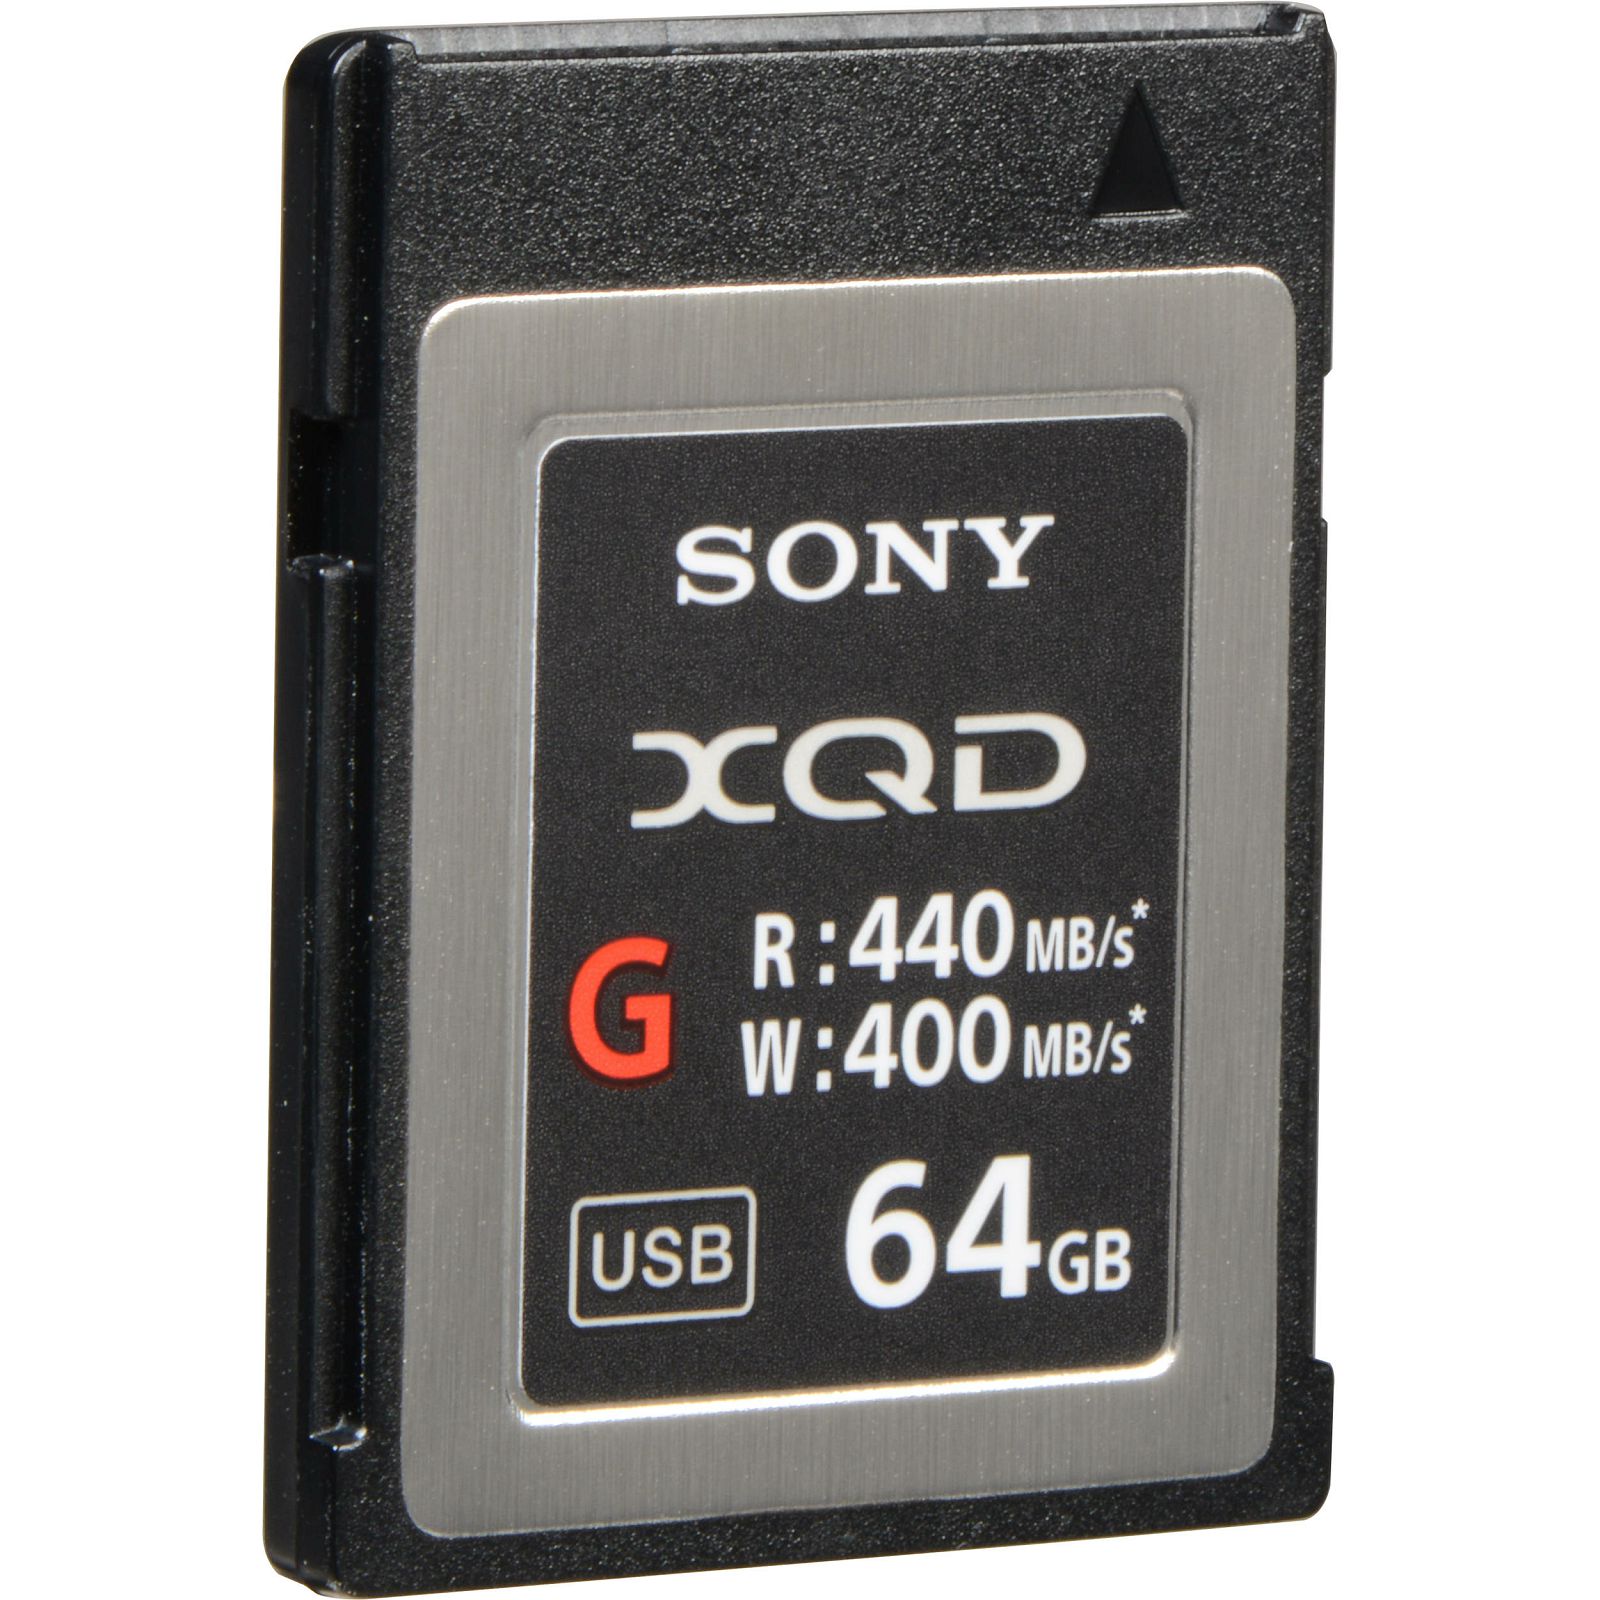 Sony XQD 64GB 440MB/s 400MB/s G Series High Speed Memory Card memorijska kartica (QDG64E-R)